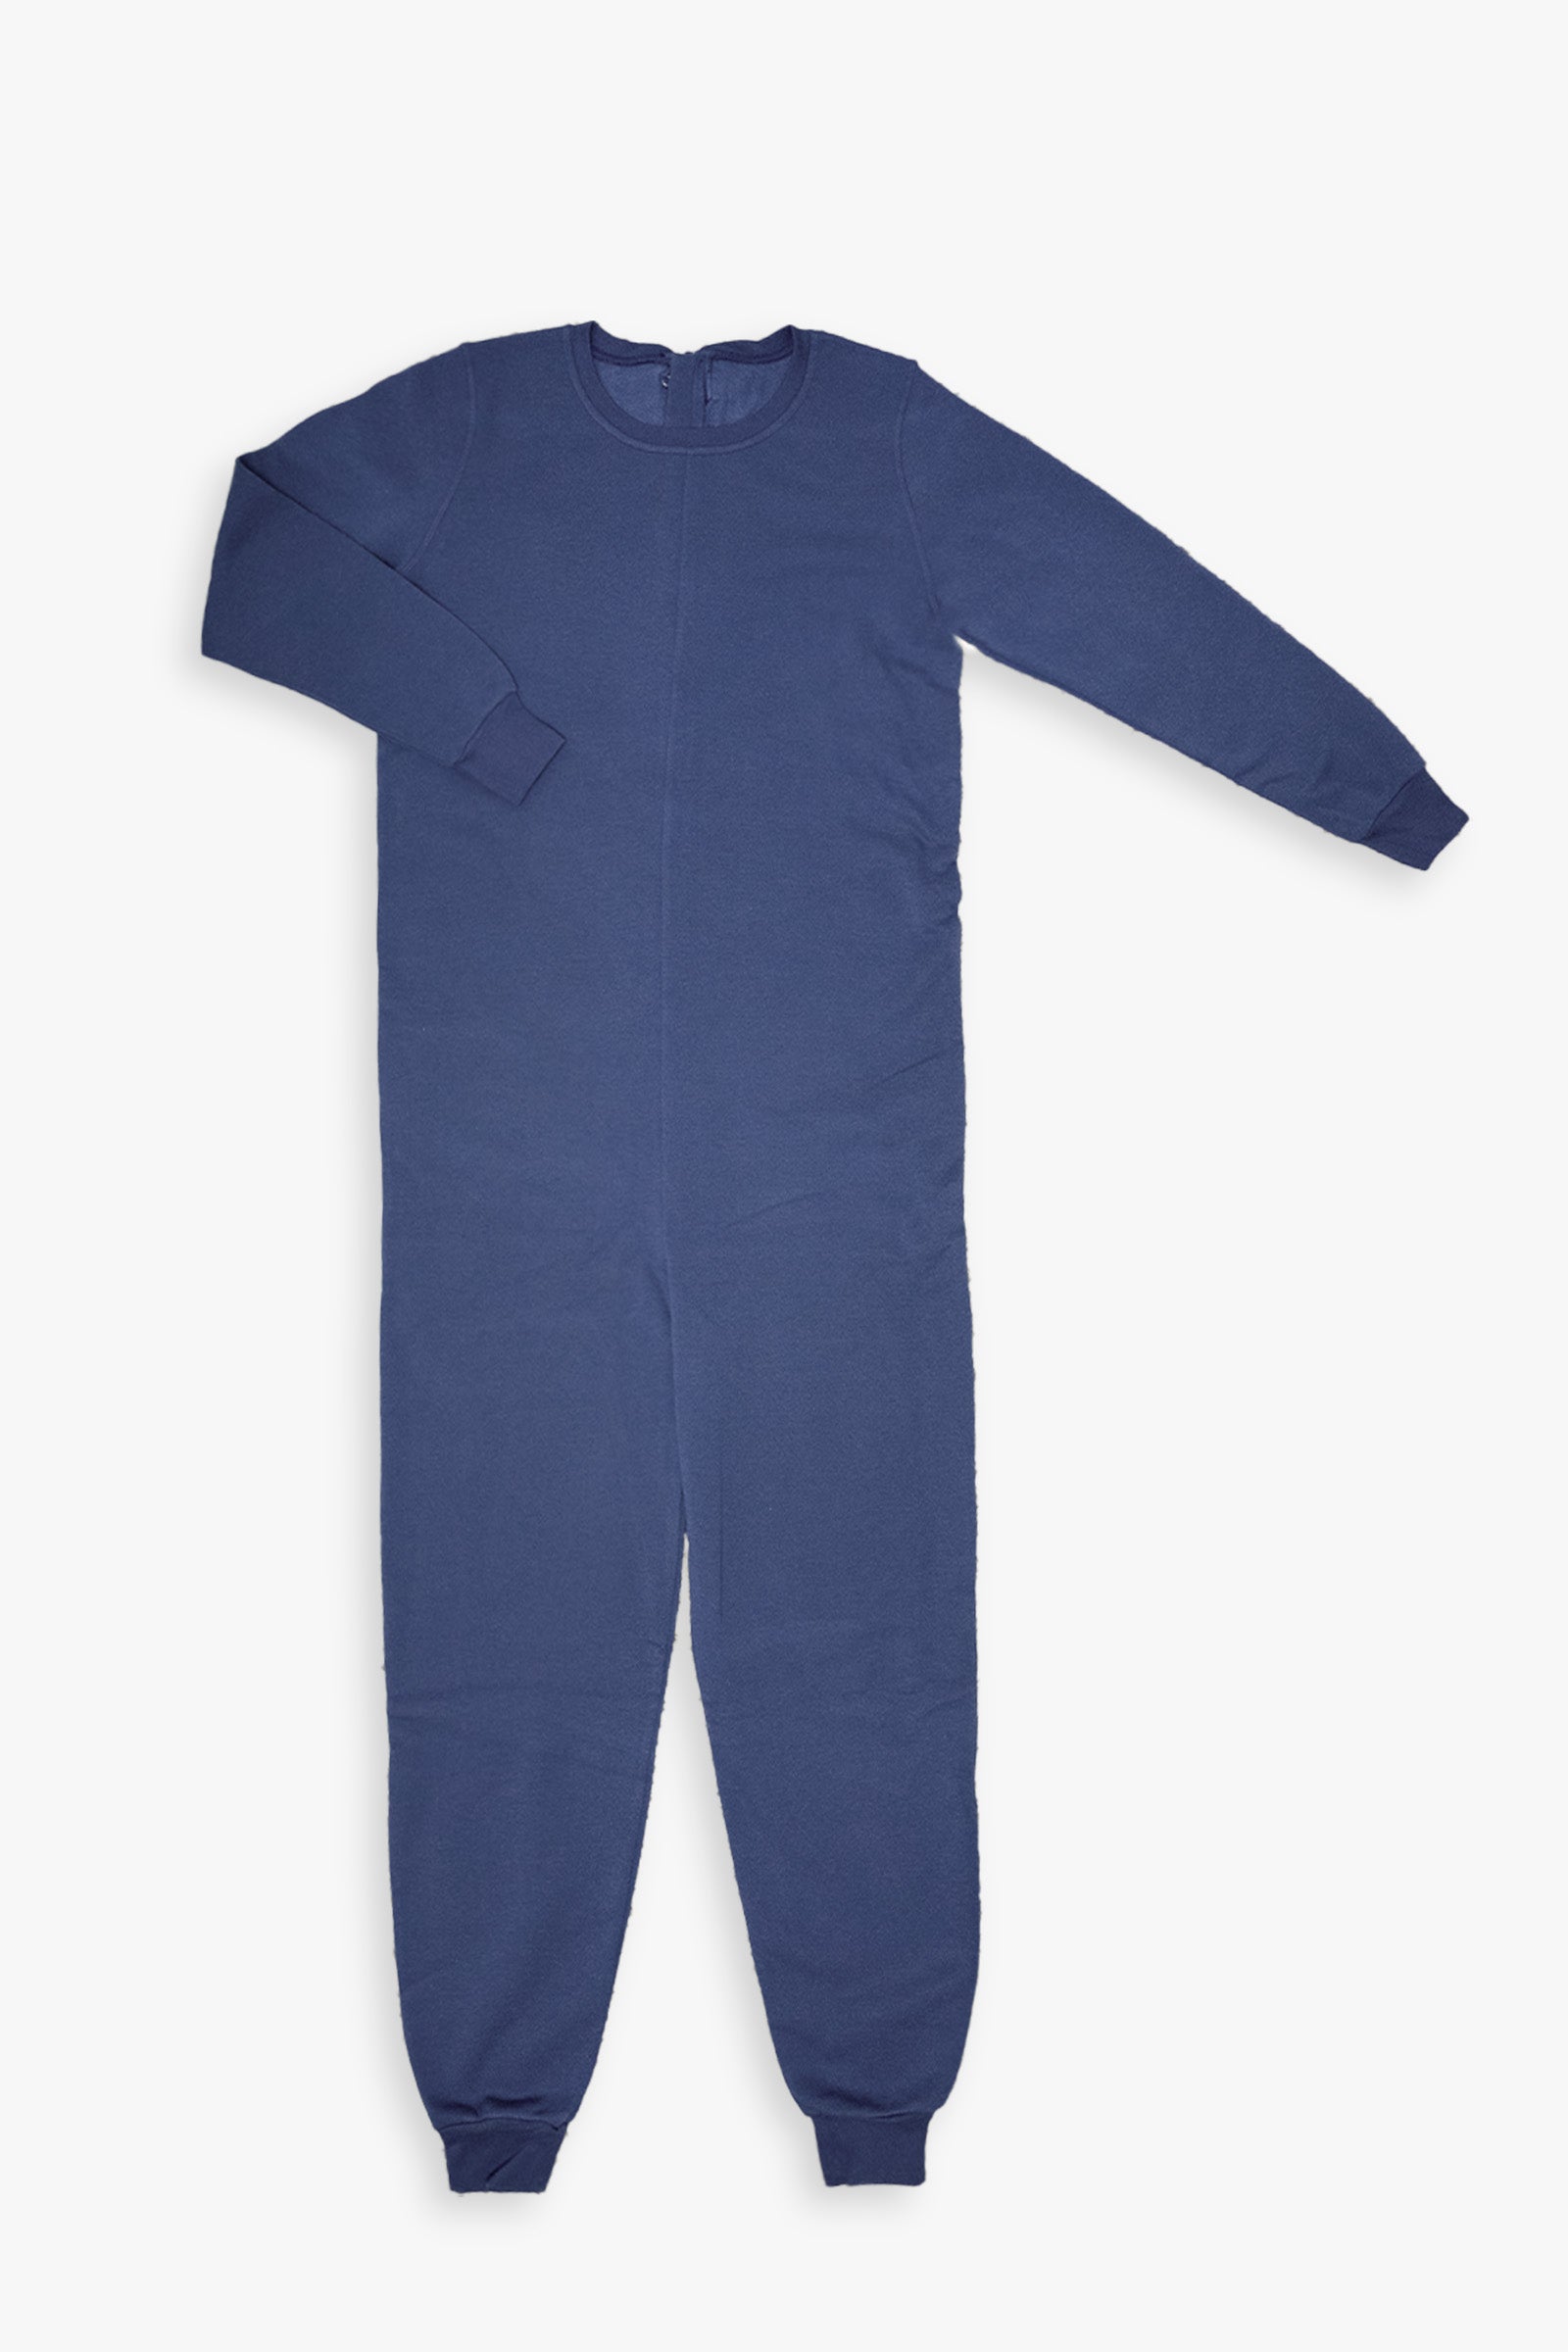 Gertex Adult Adaptive Back-Zip Sleepwear